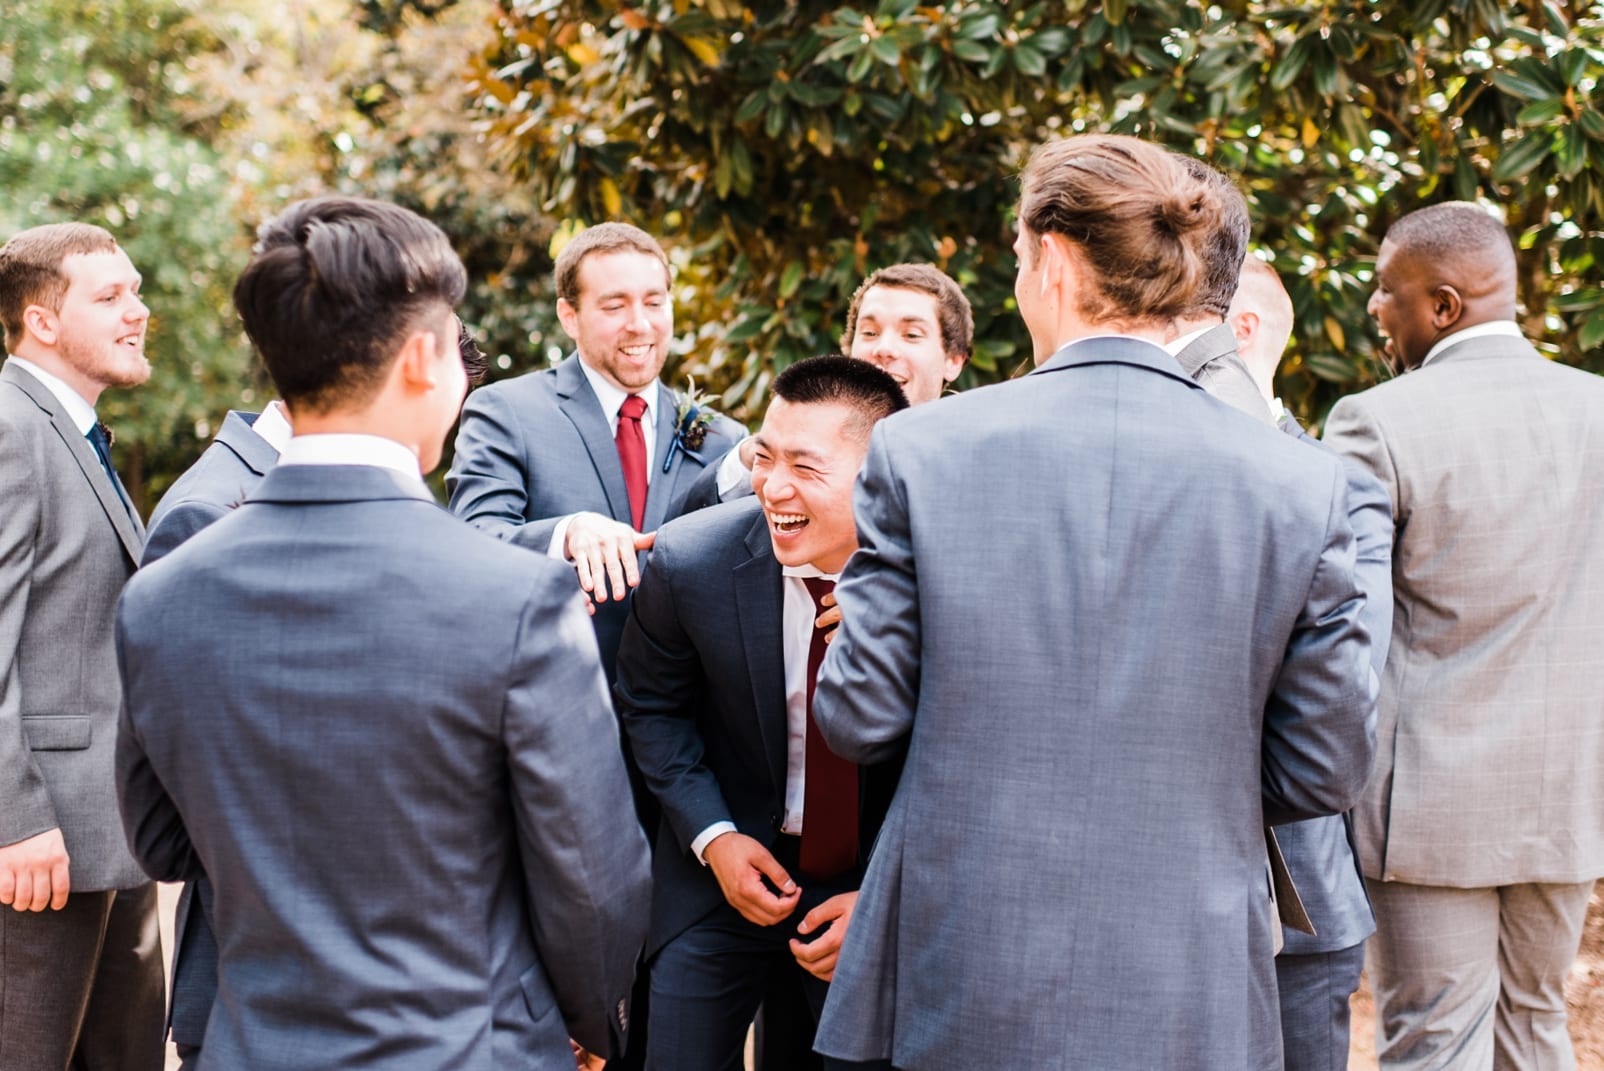 sutherland estate wedding photographer groomsmen laughing groom in navy suit photo